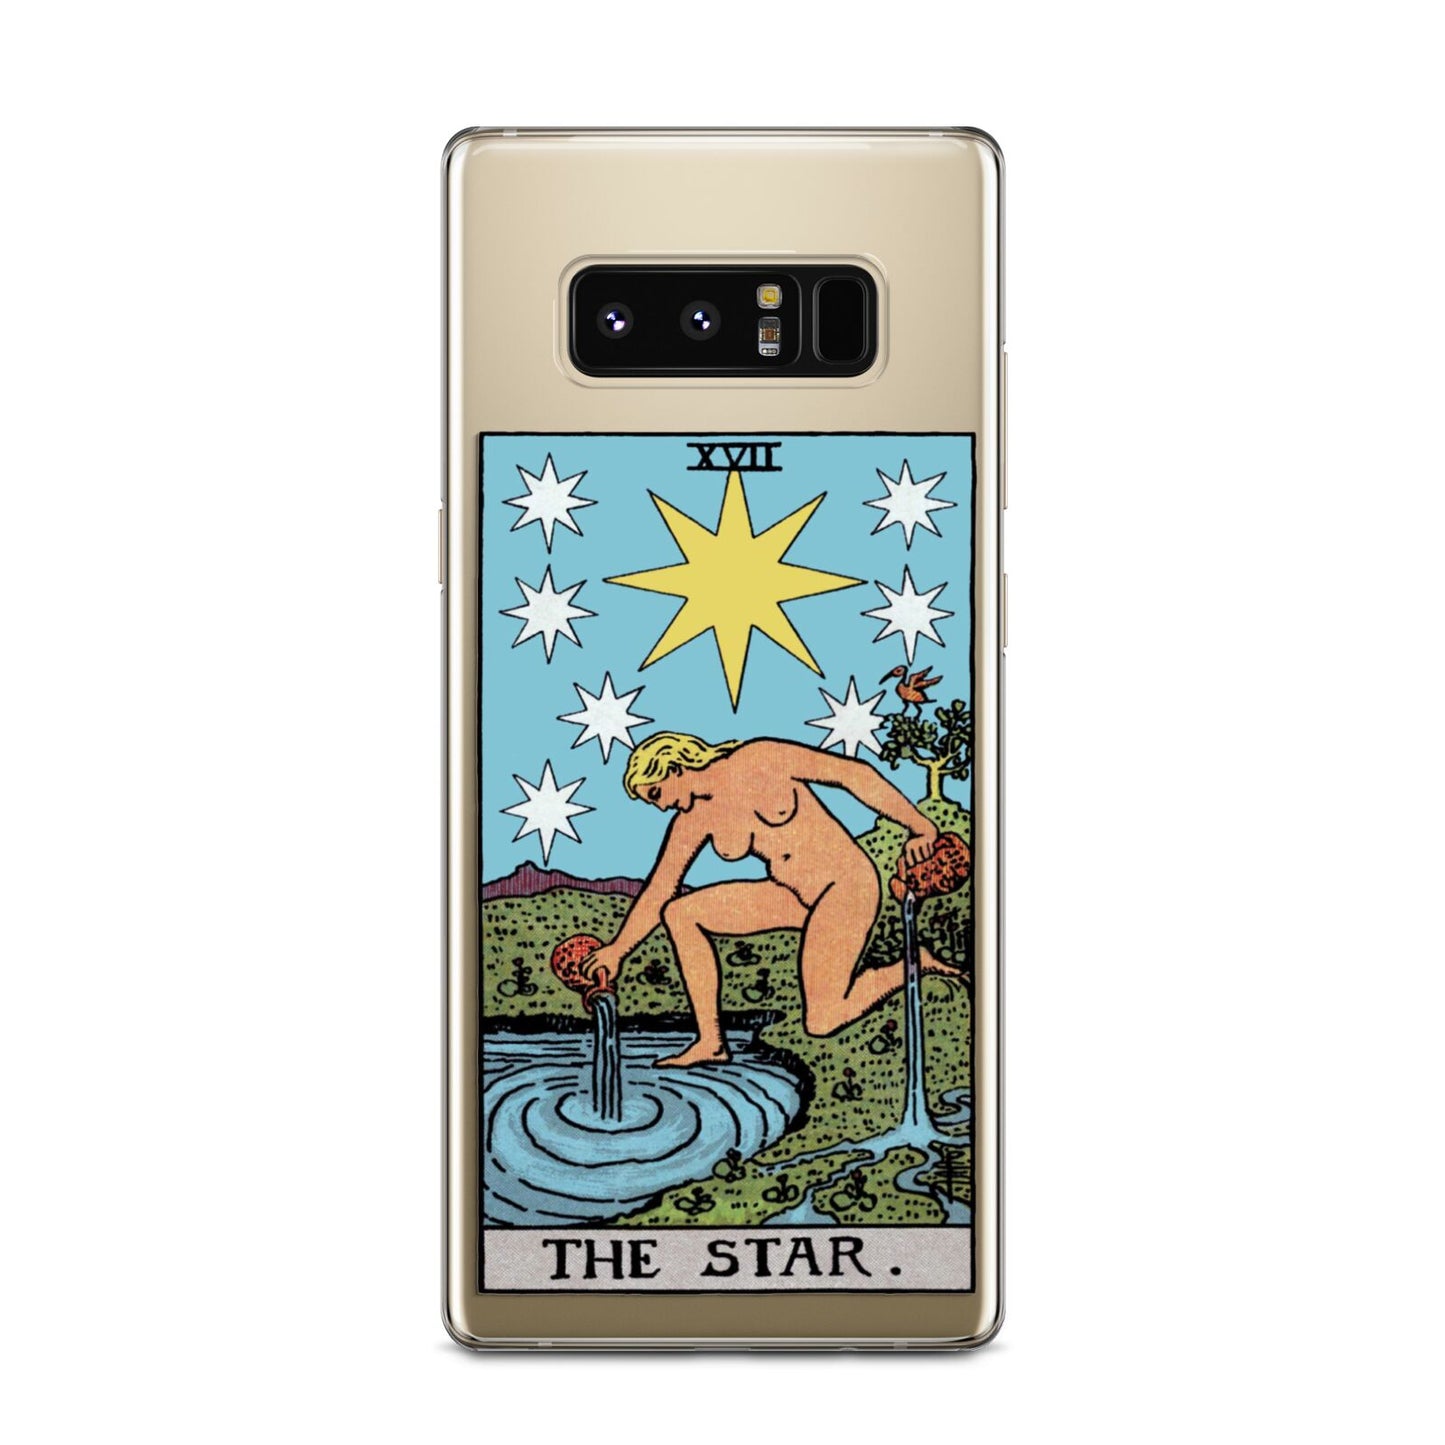 The Star Tarot Card Samsung Galaxy Note 8 Case